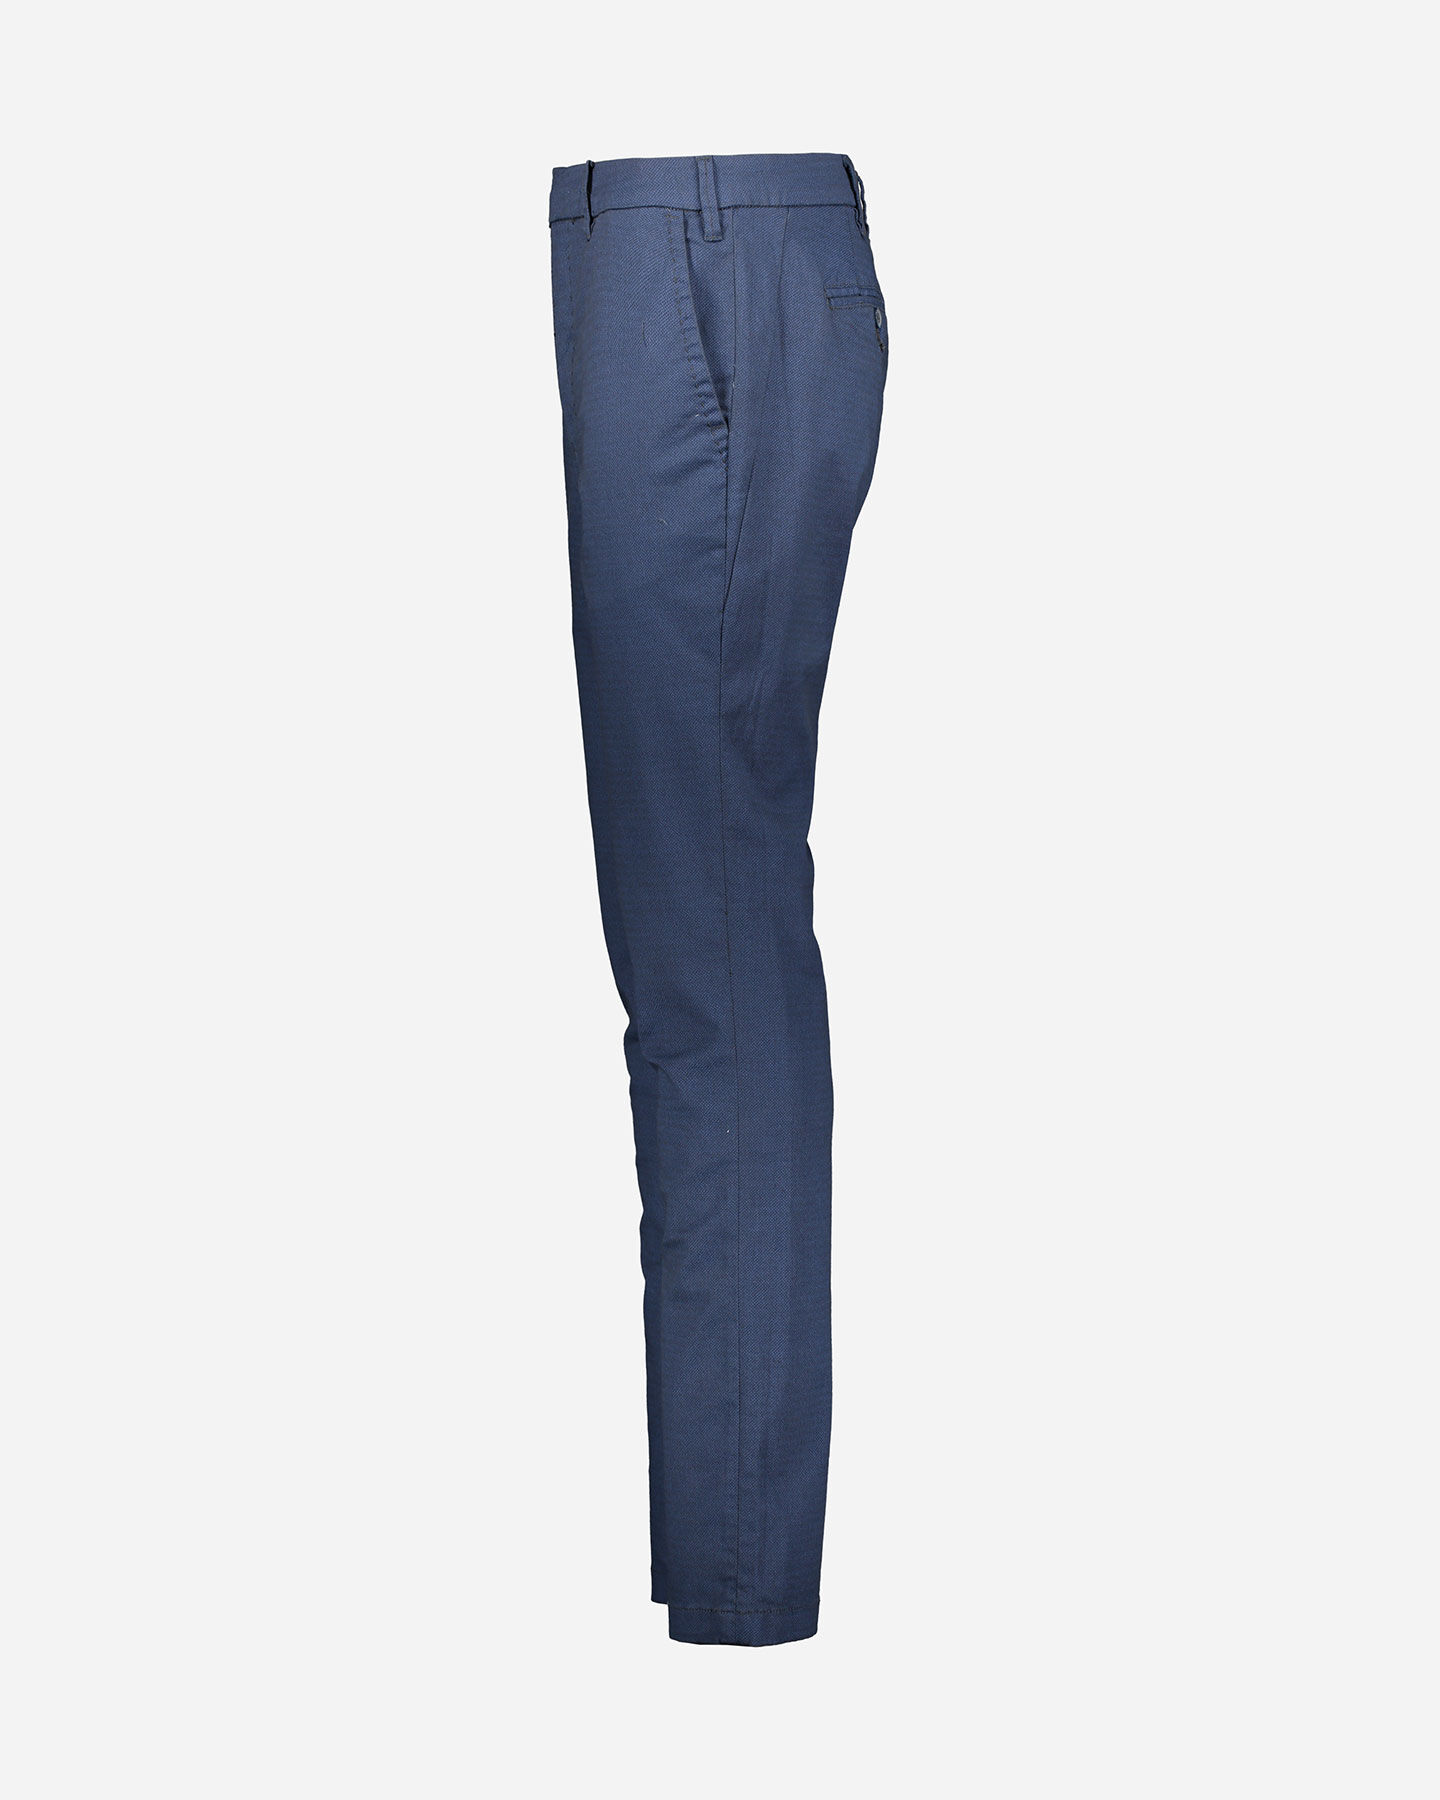  Pantalone DACK'S CHINO STRETCH M S4074159|516|46 scatto 1